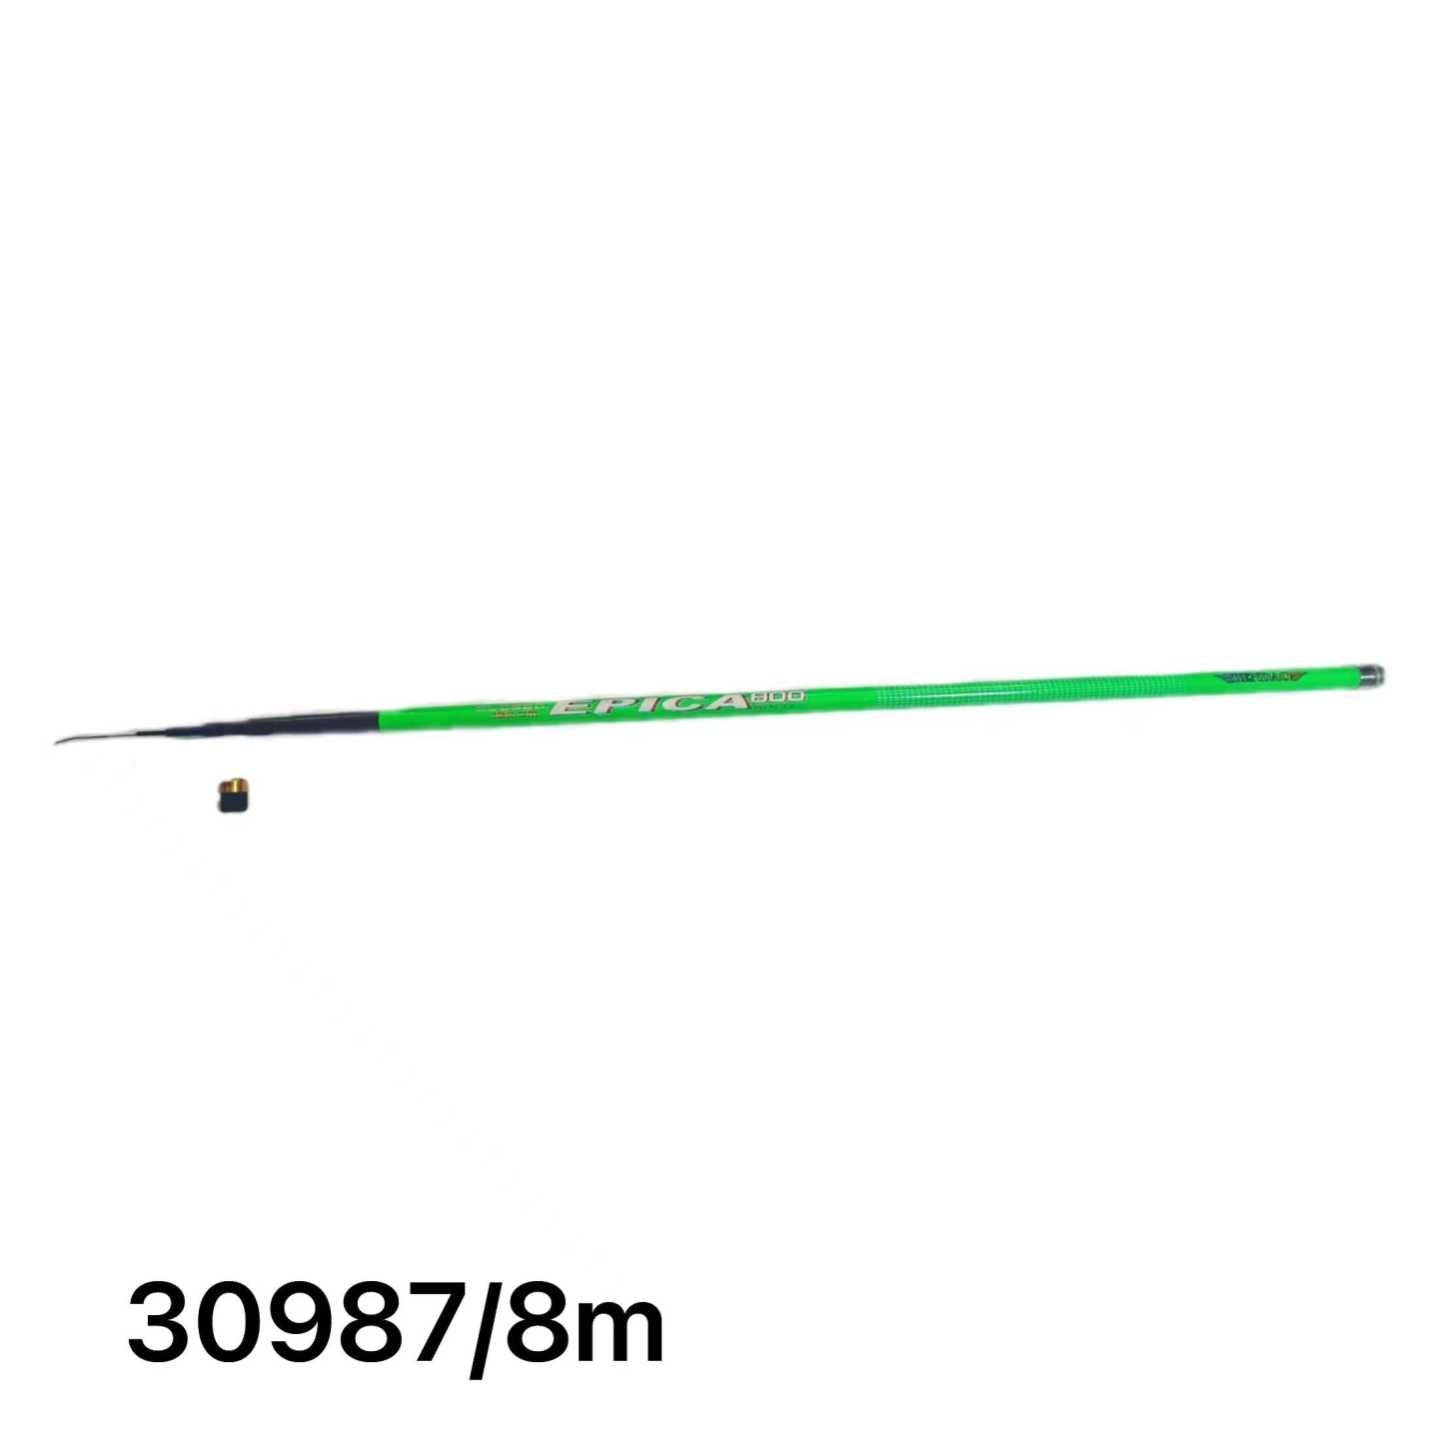 Fishing rod - Telescopic - 3.0m - 30897